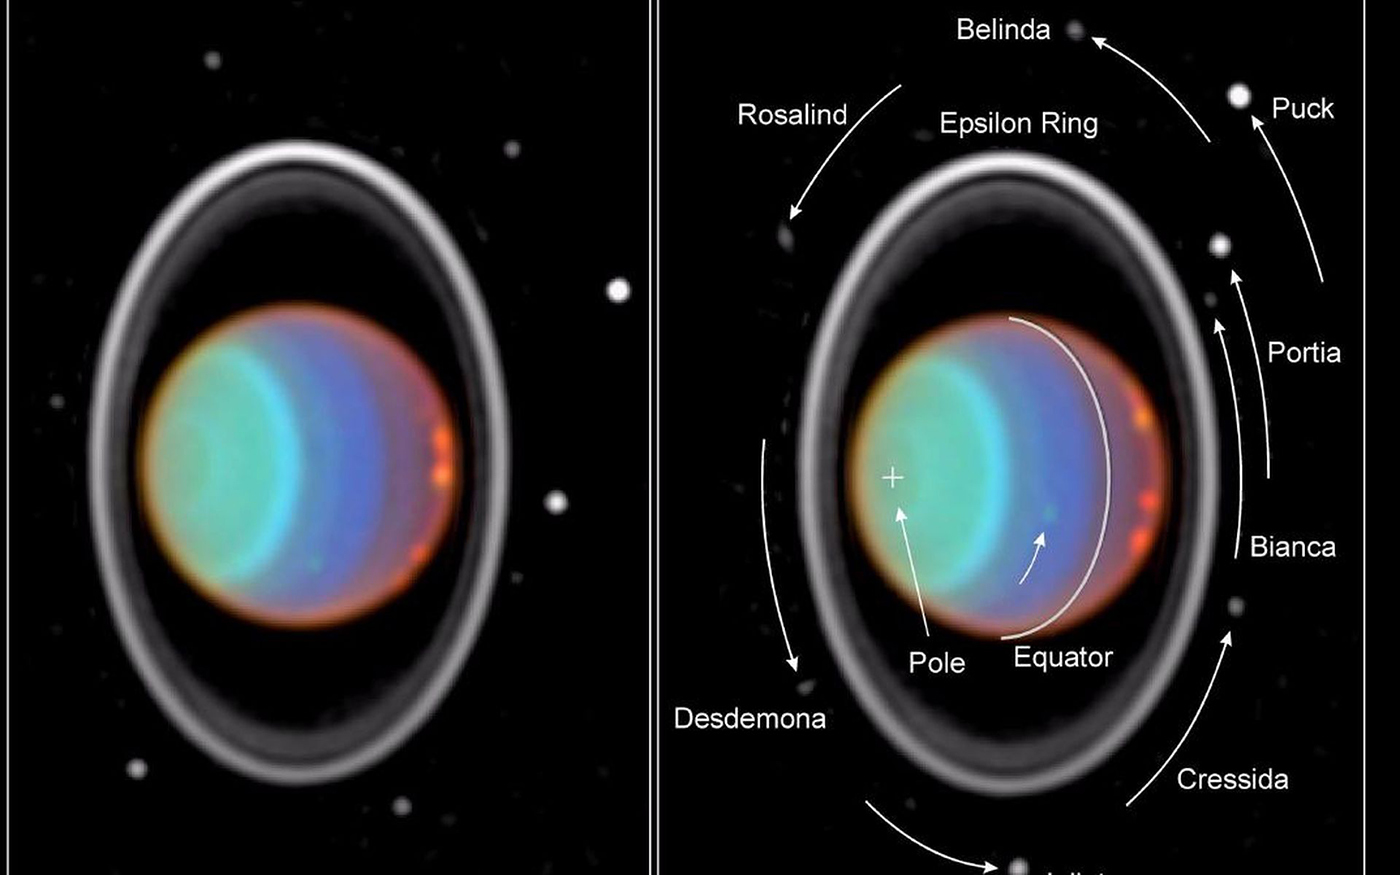 Solar System Survey - Uranus, Neptune and the Kuiper Belt (Part VI)